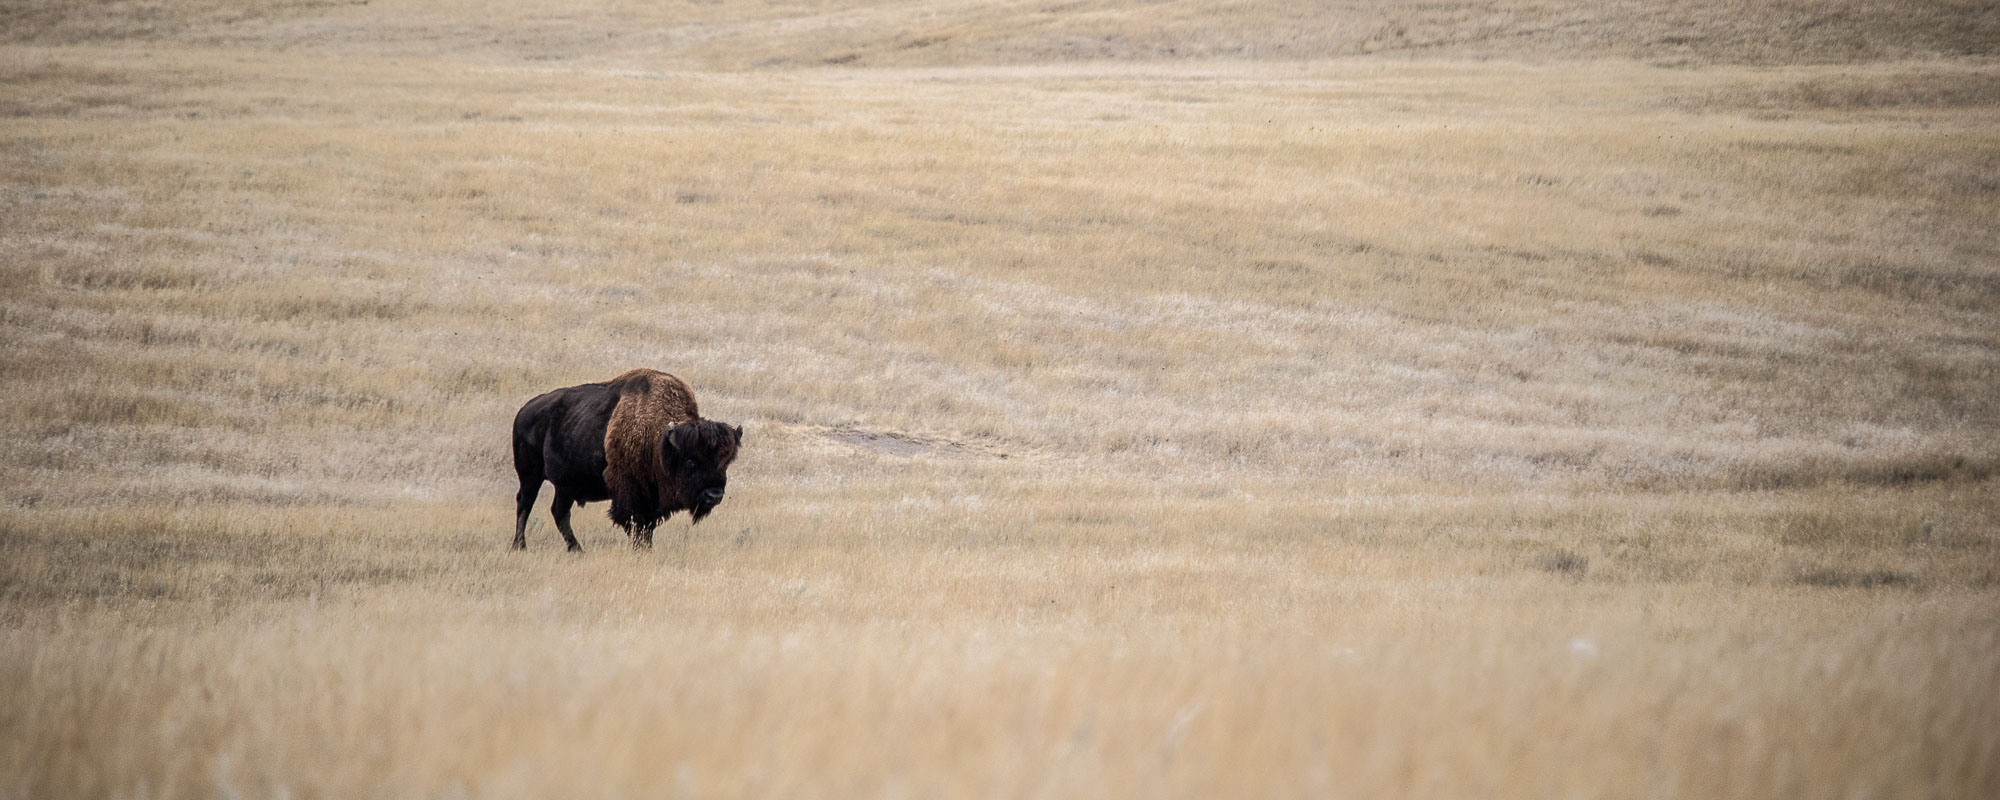 Bison in the prairie along Sage Creek Rim Road in Badlands National Park, South Dakota